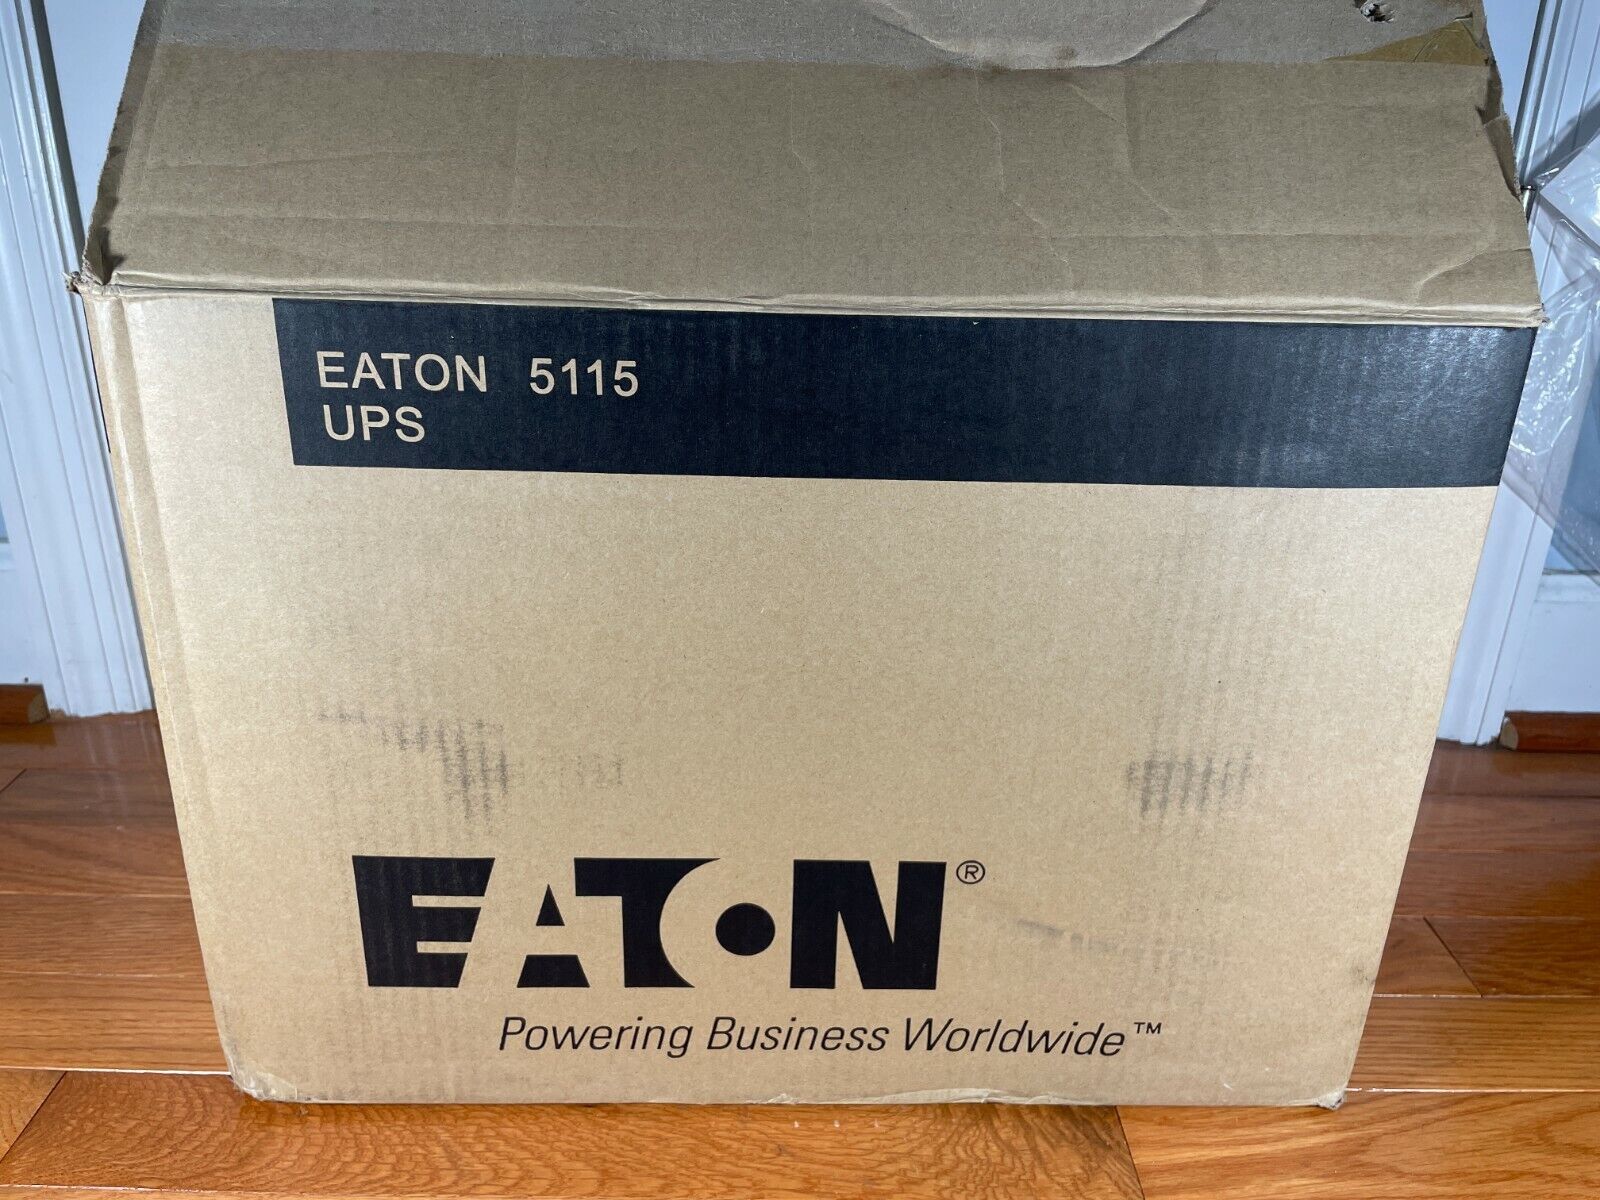 Eaton PW5115 1000 USB UPS 1000VA 670W 120V 6-Outlet Open Box - Expired Battery